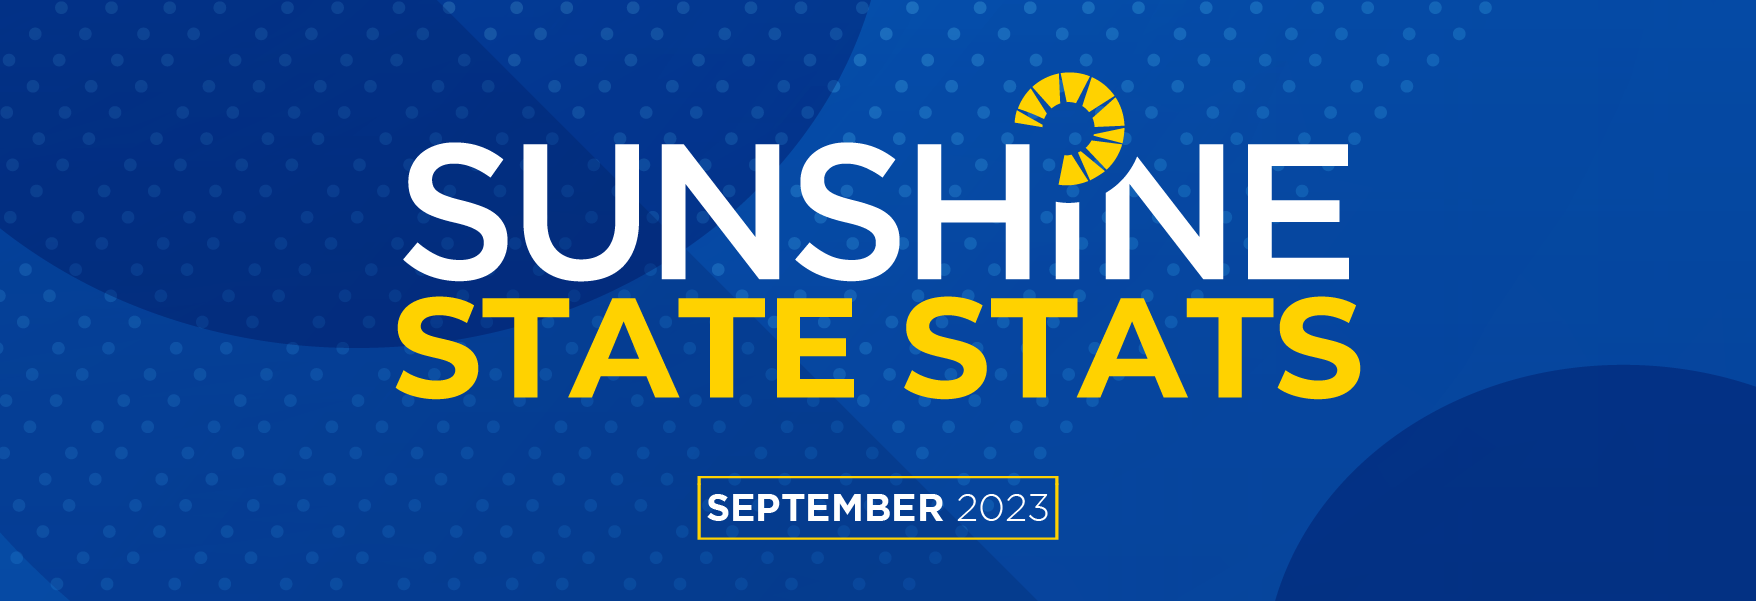 September 2023 Sunshine State Stats